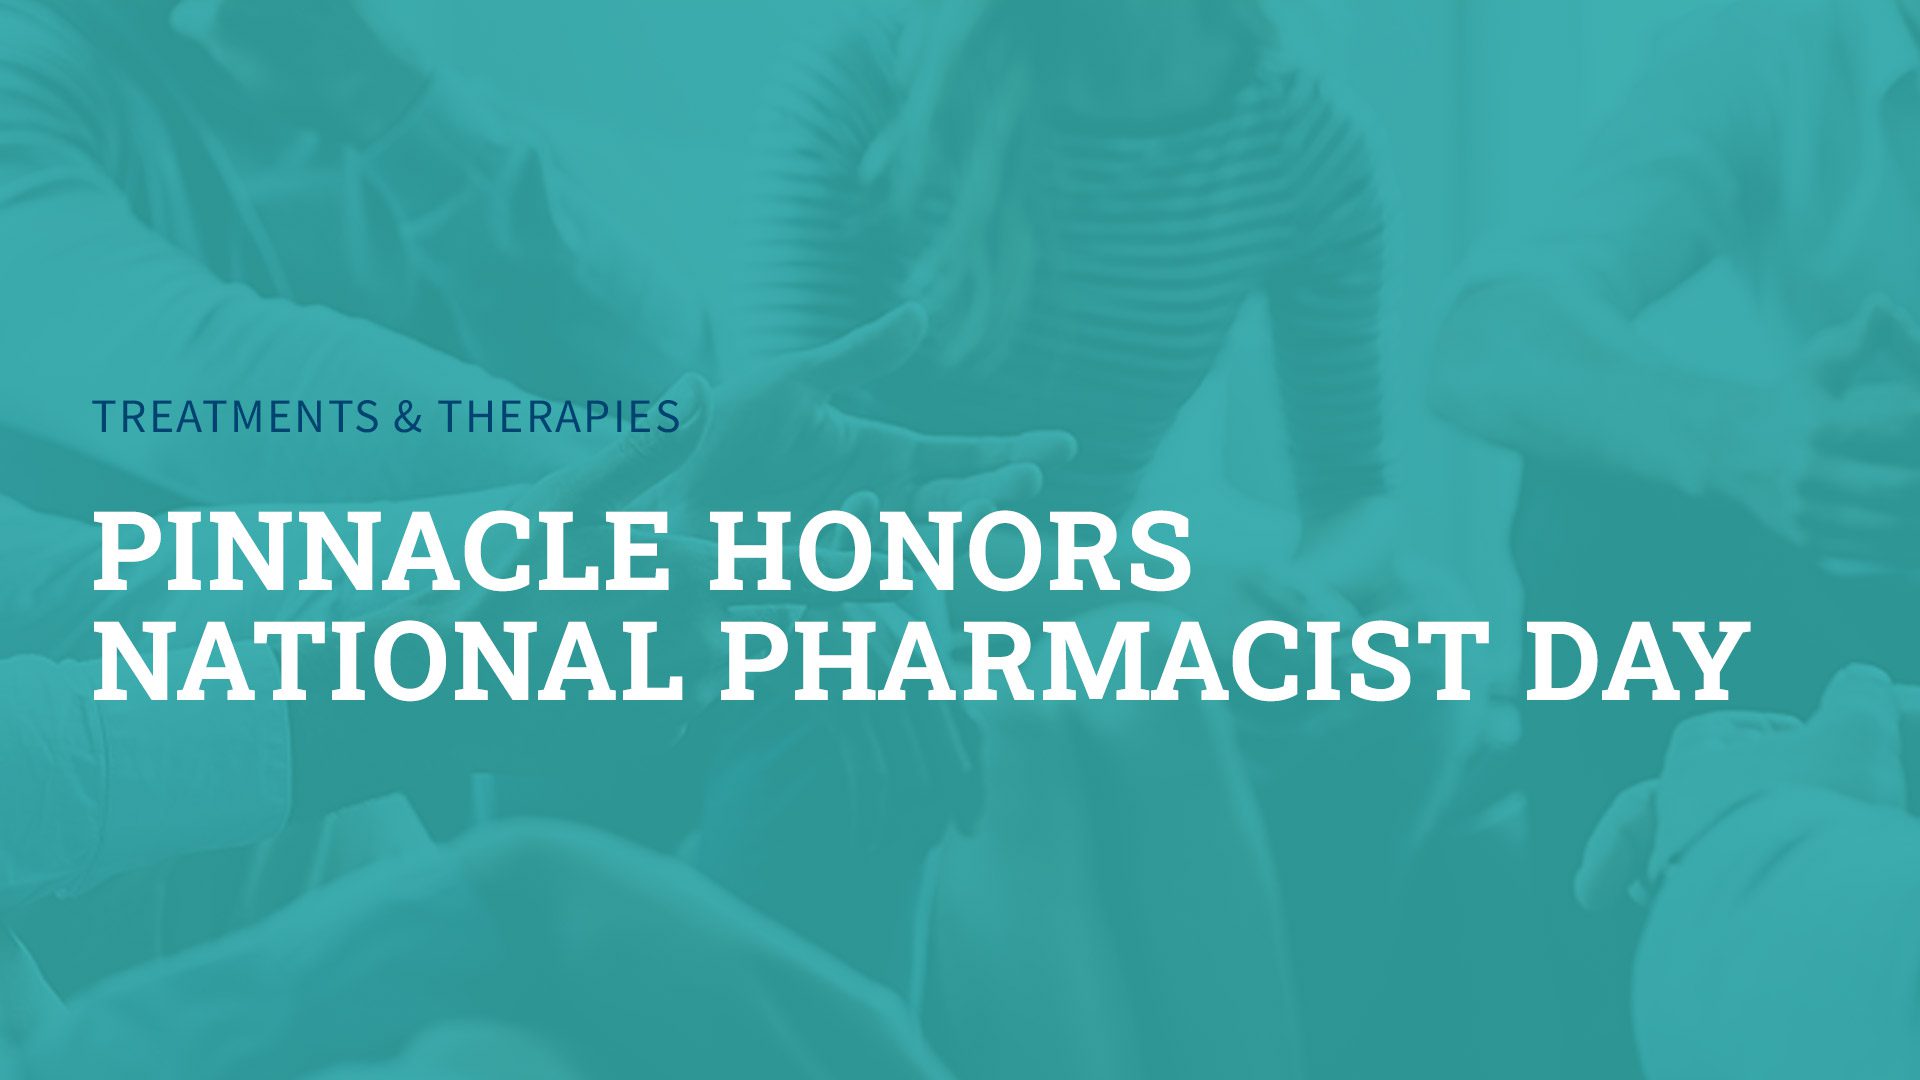 Pinnacle Honors National Pharmacist Day